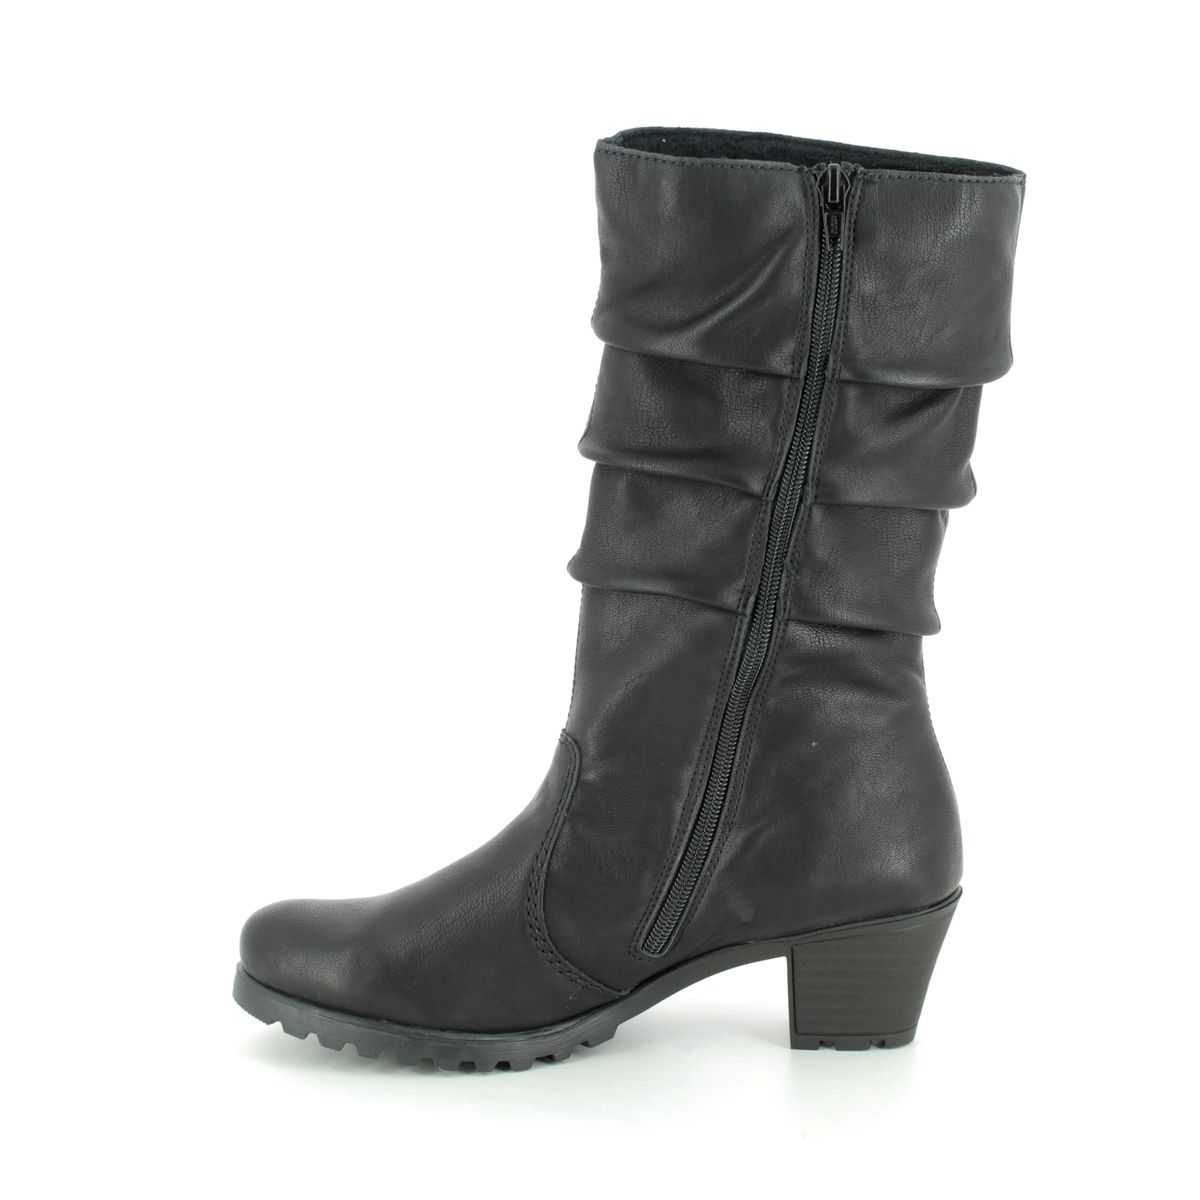 Y8094-01 Black knee-high boots